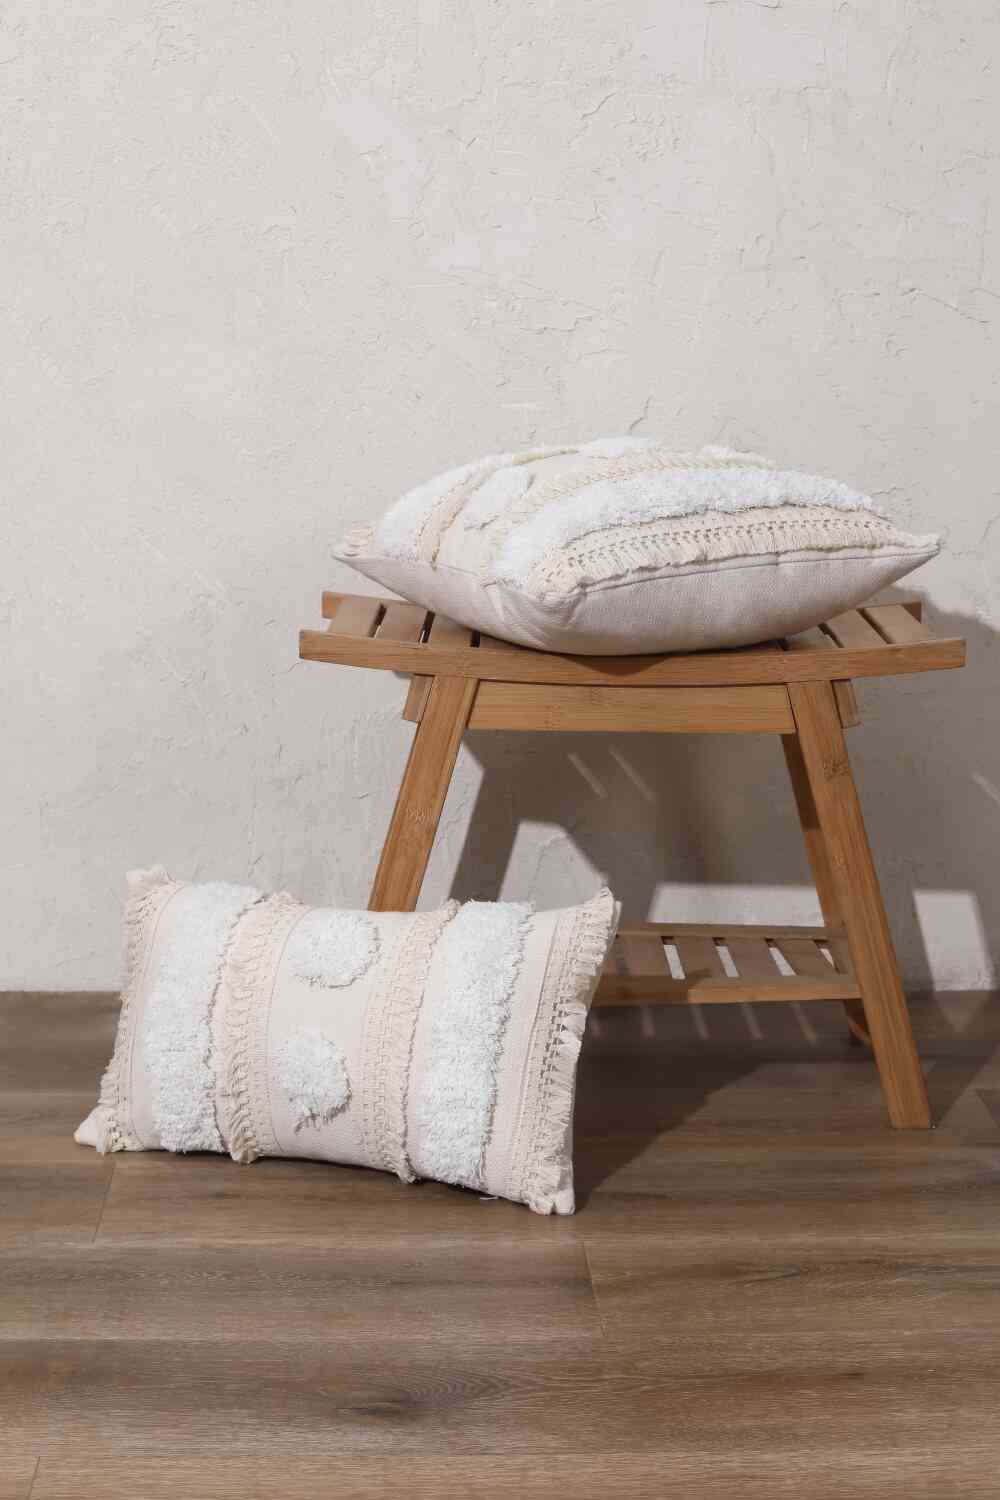 Eye-Catching Decorative Throw Pillow Case - Tophatter Deals